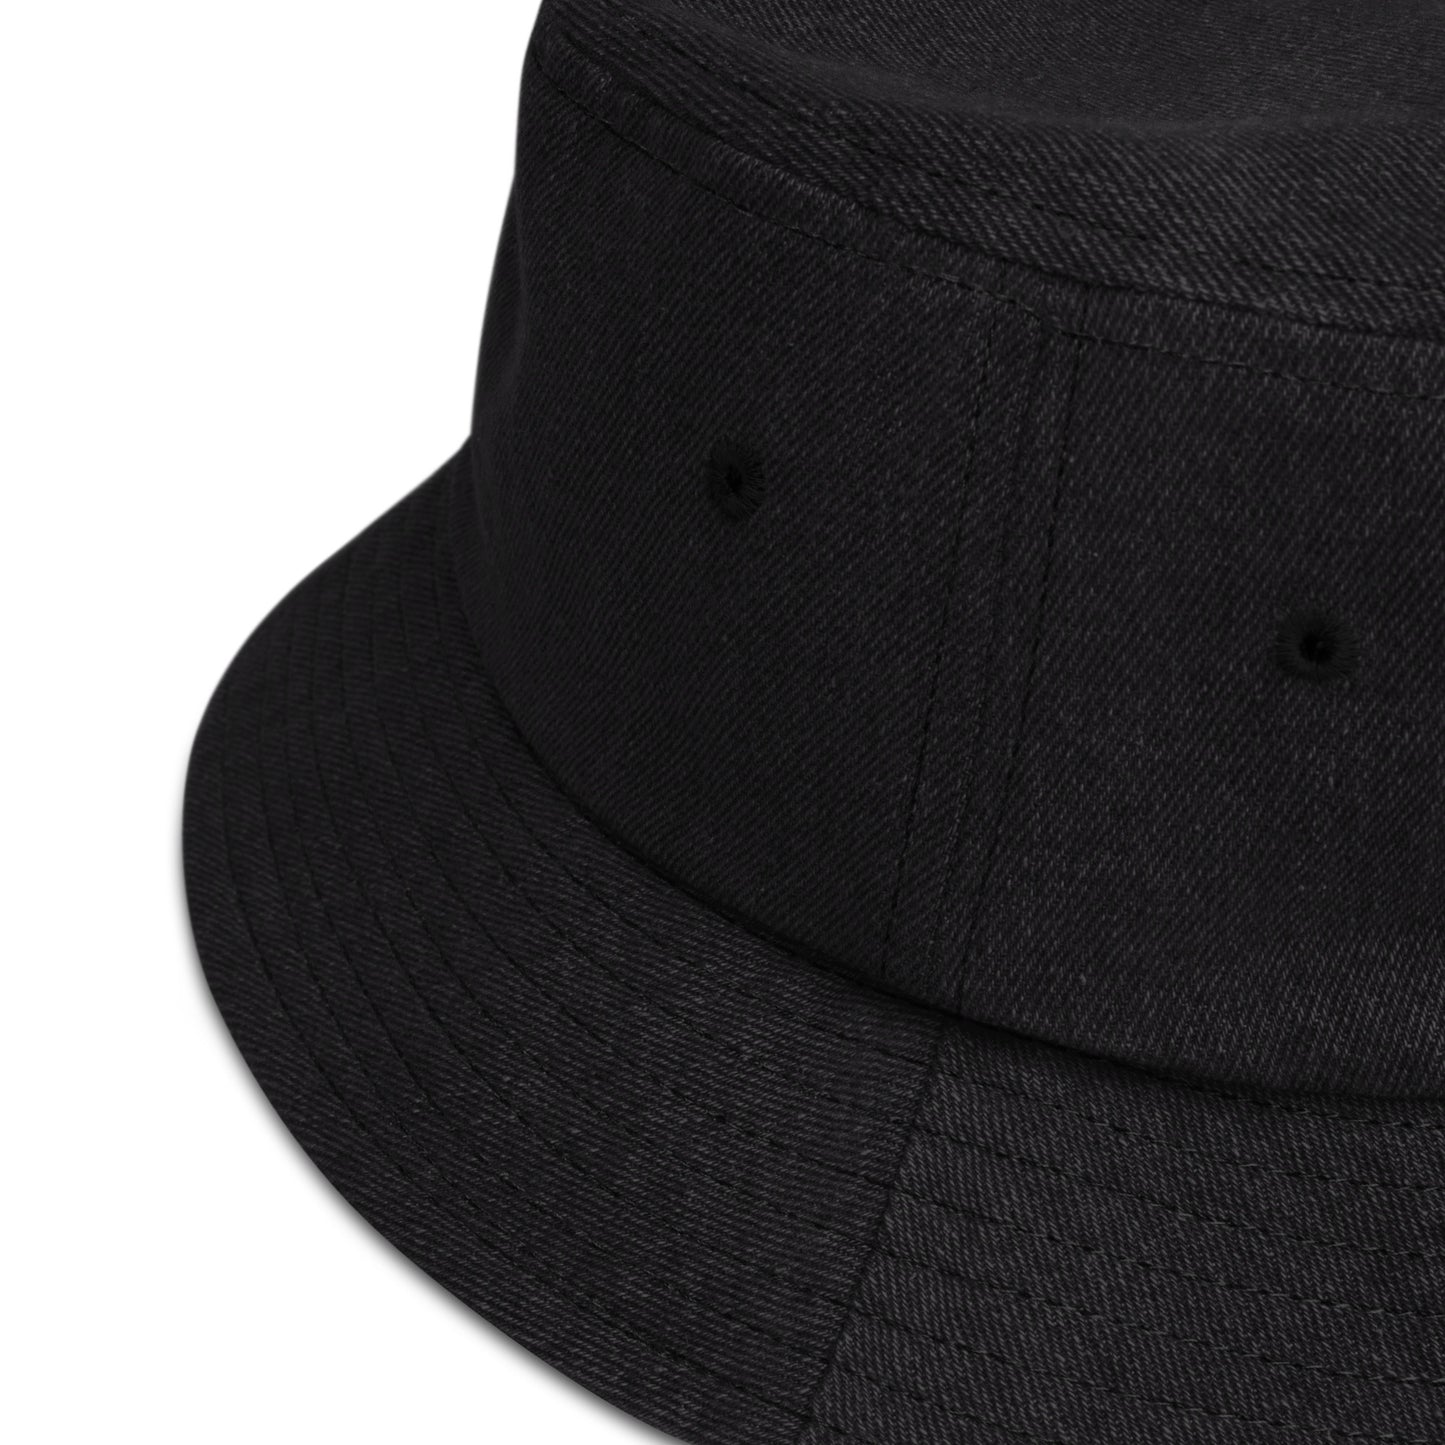 #EMDRSAVESLIVES Denim Bucket Hat (Black Denim / One size) , Flat Embroidery